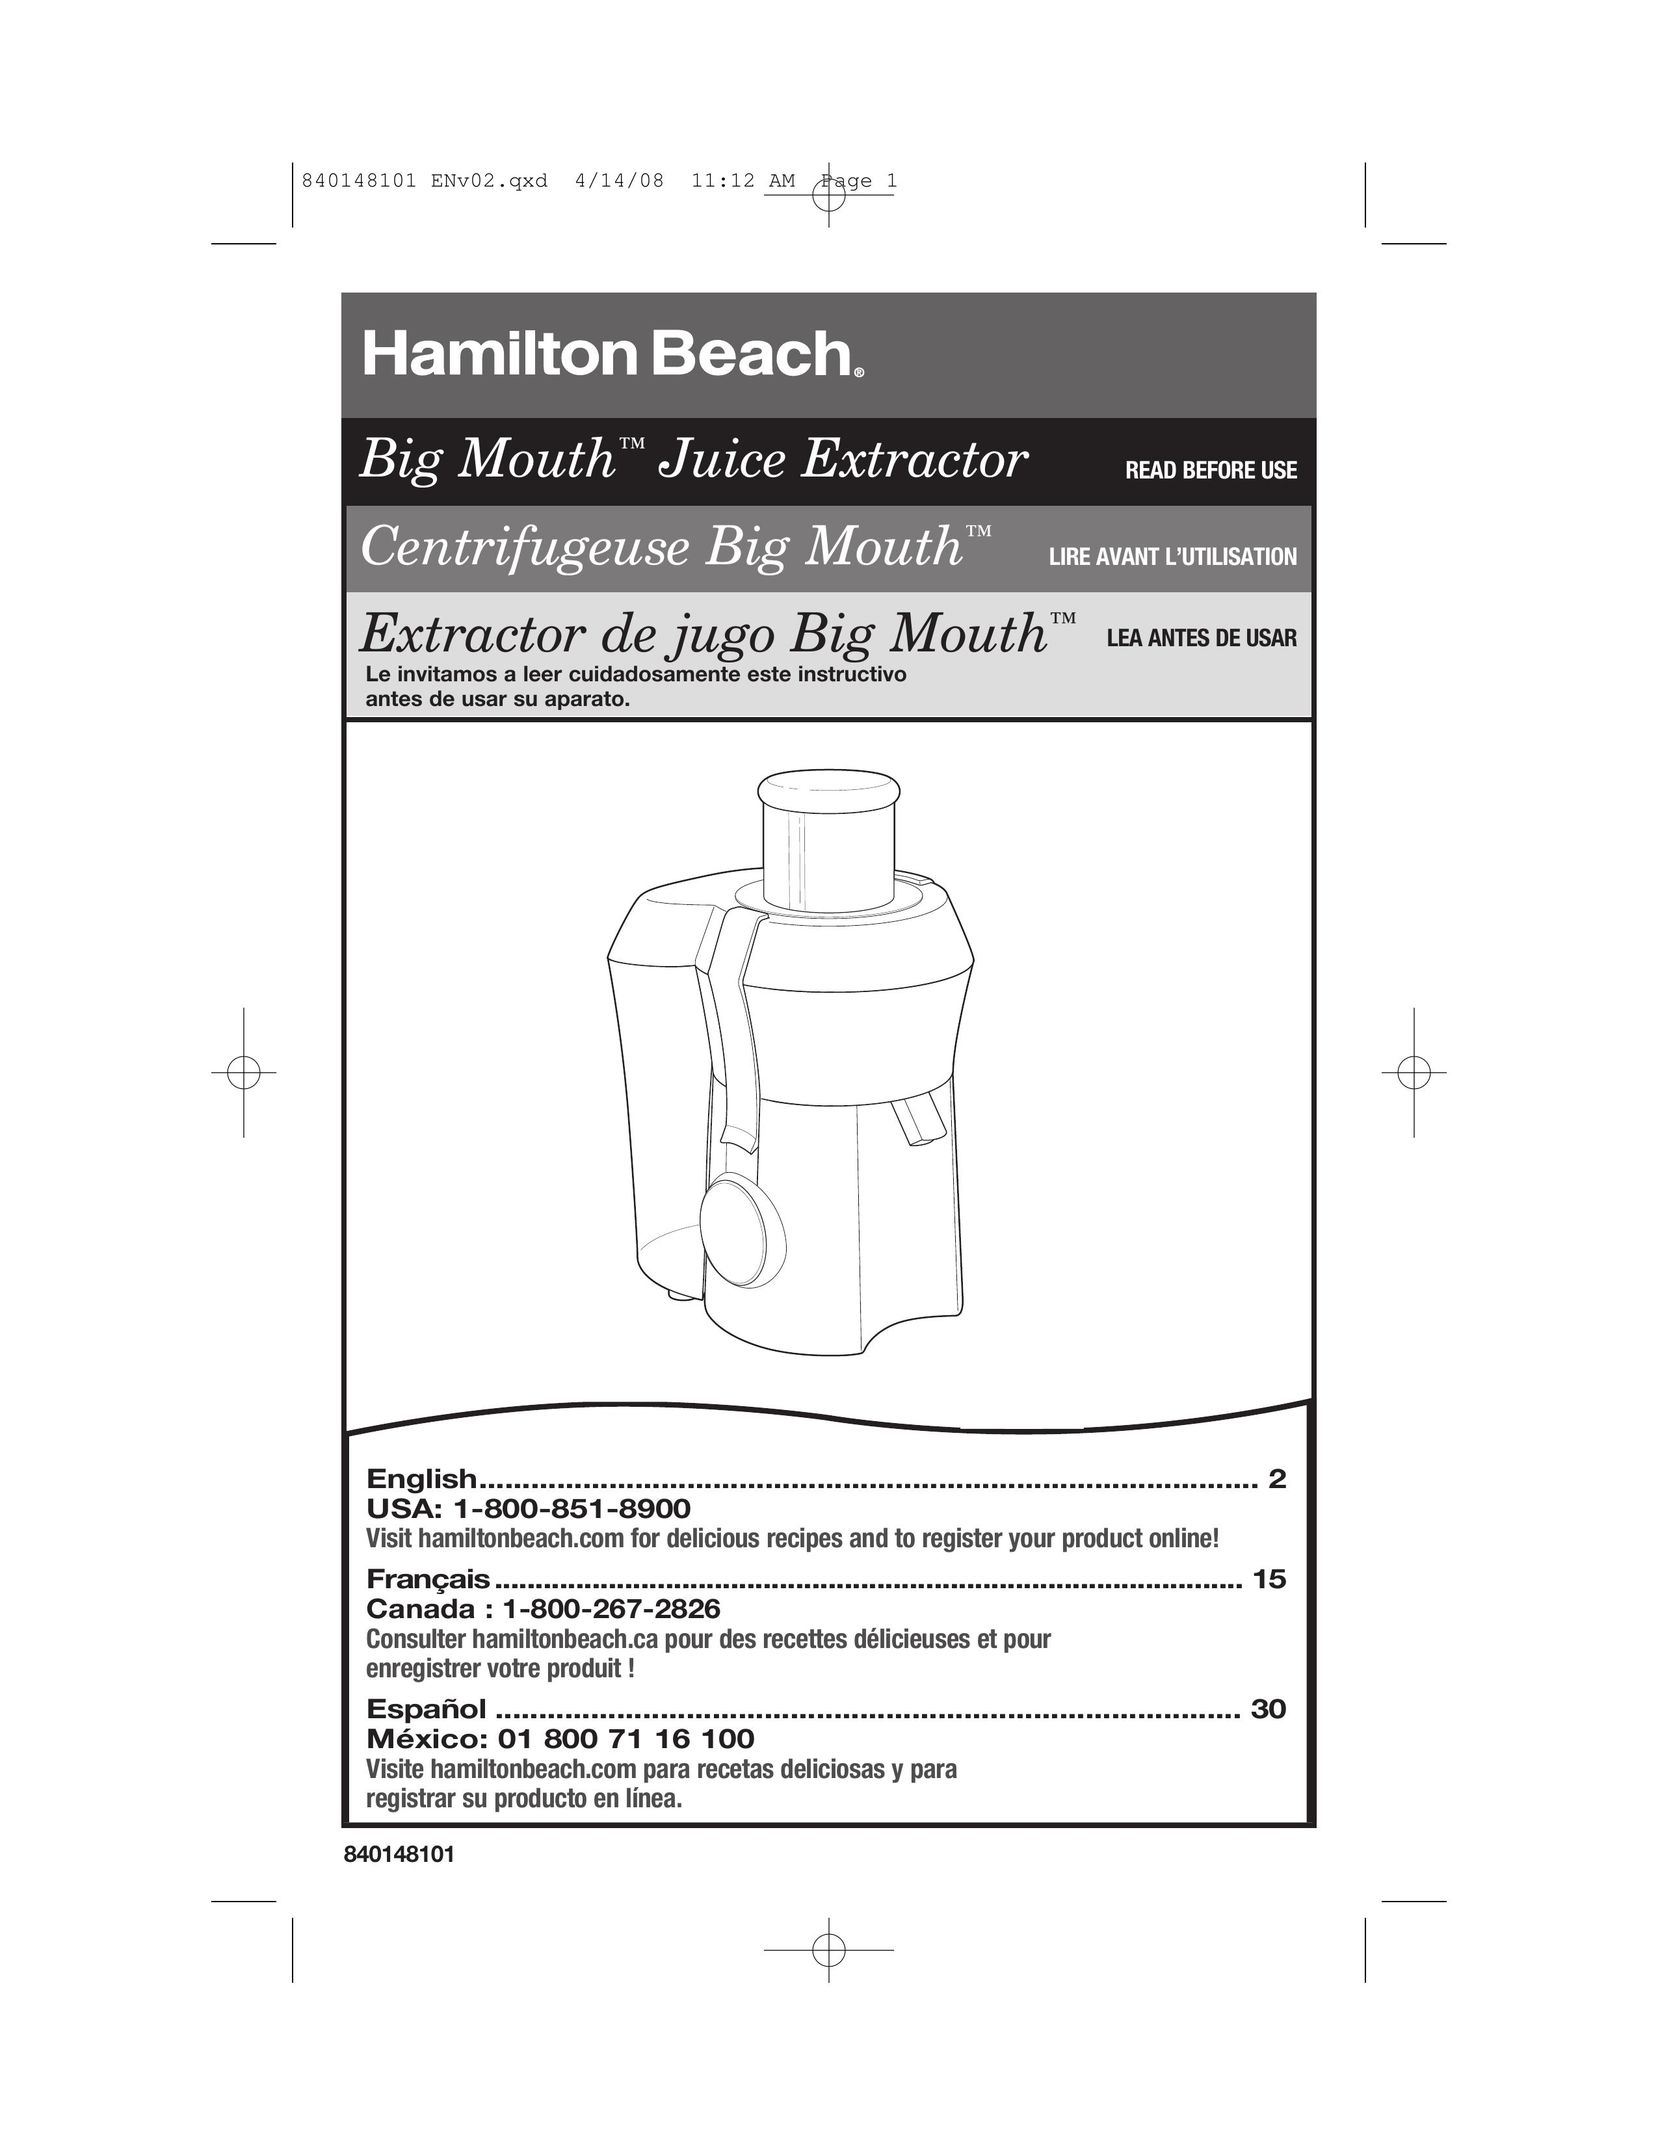 Hamilton Beach 840148101 Juicer User Manual